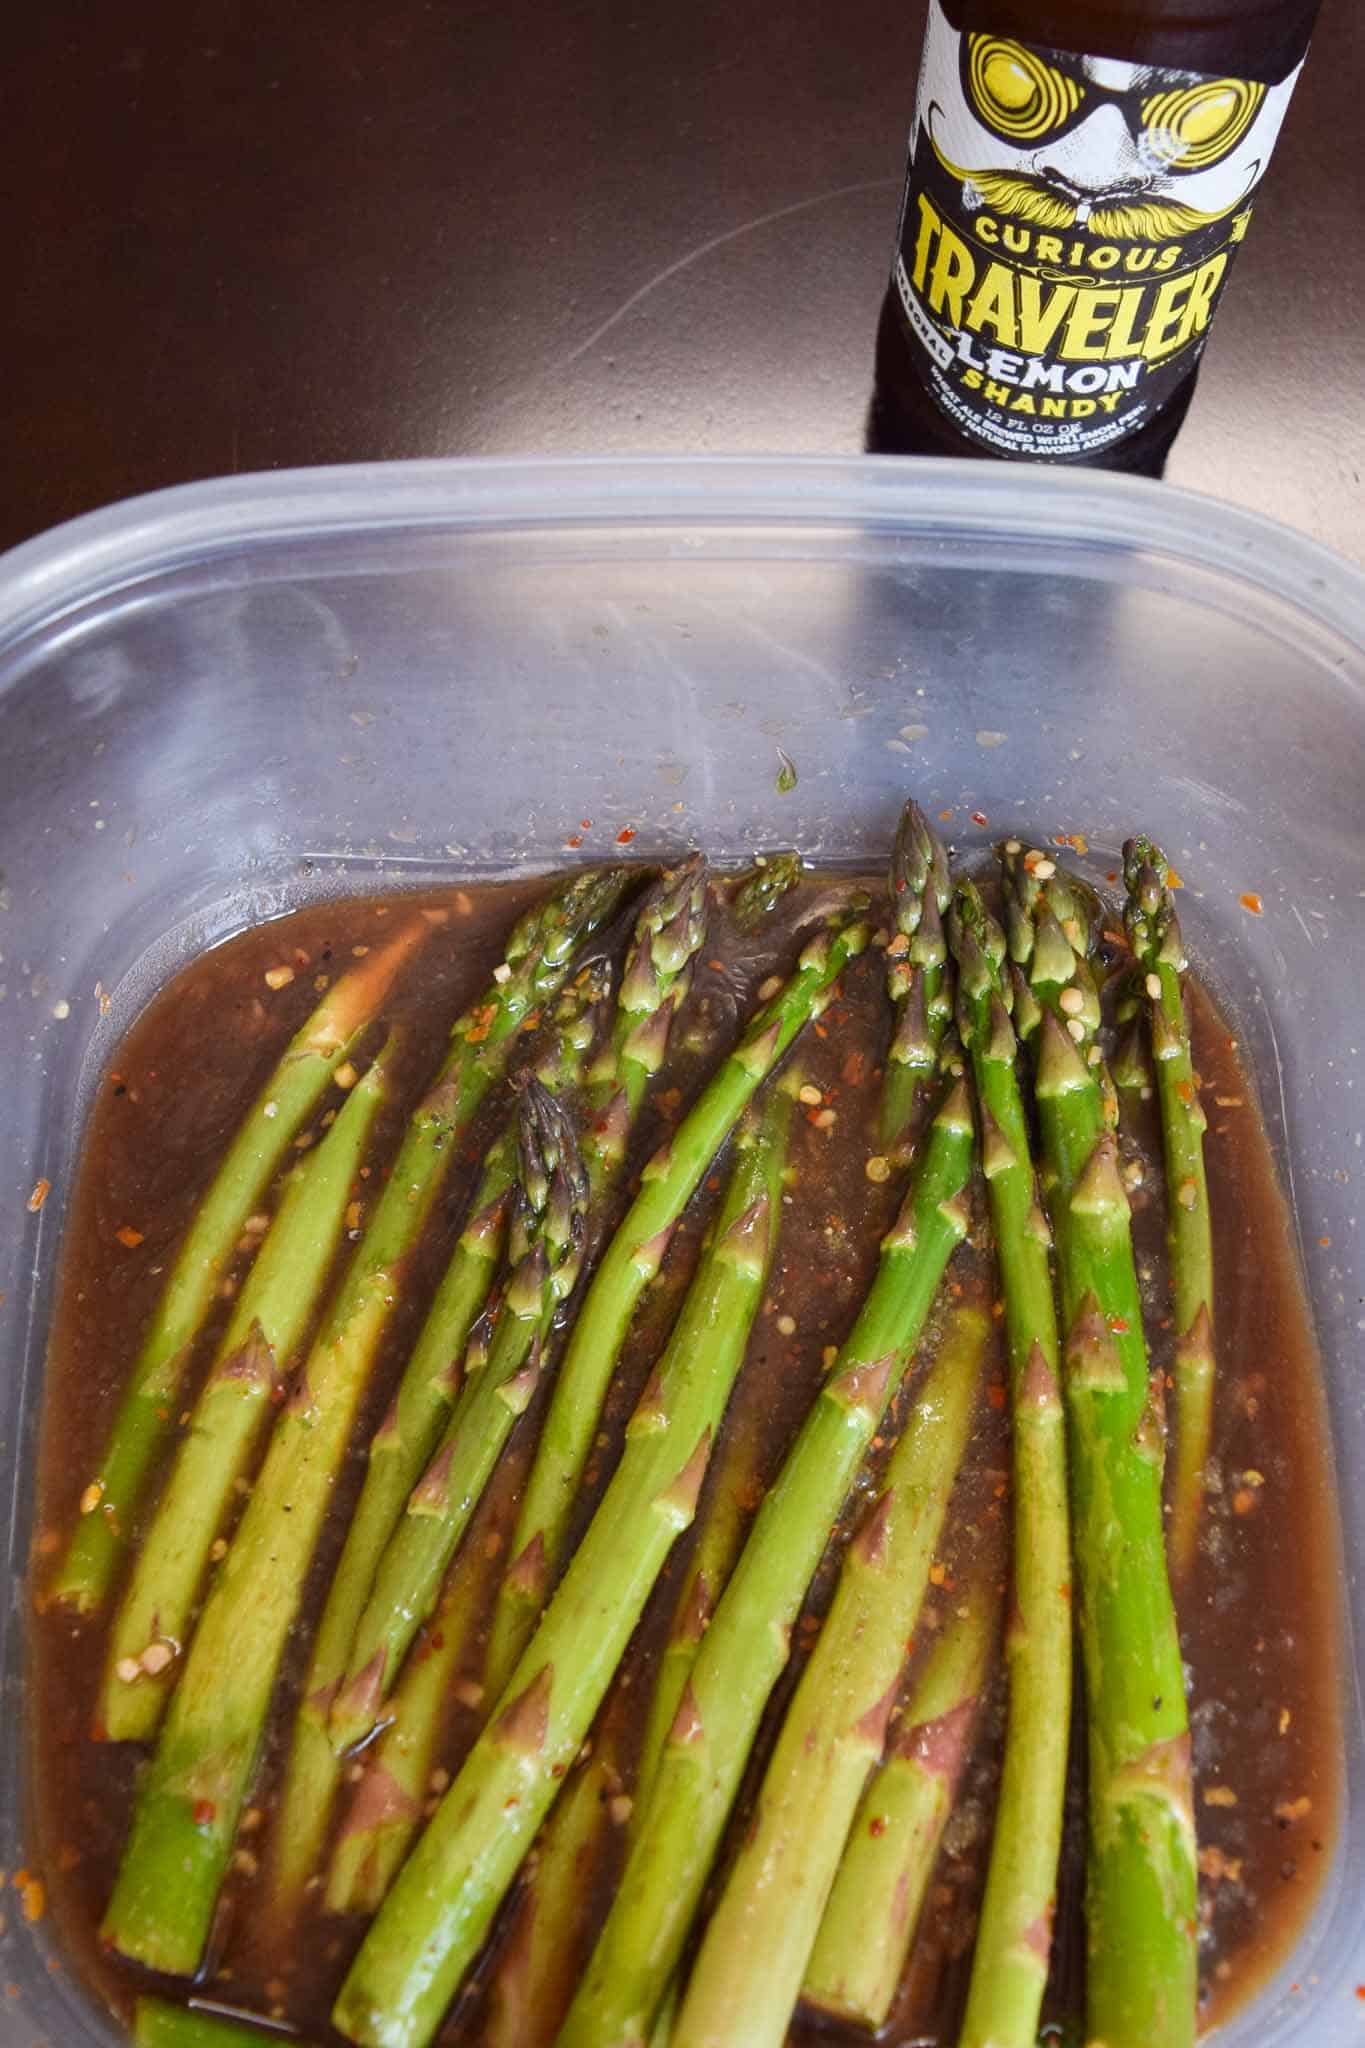 Asparagus marinating in Tupperware container